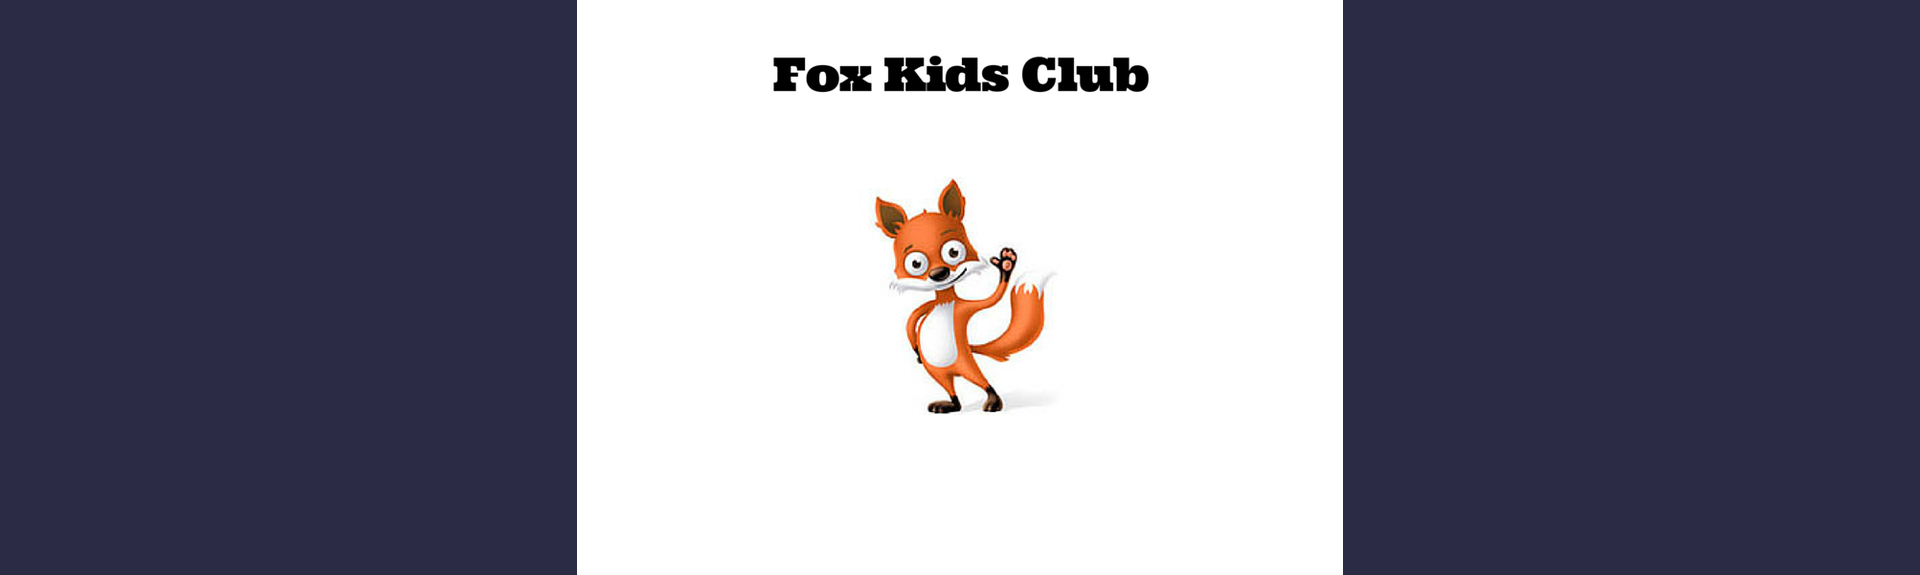 Kids Party Venue| Fox Kids Club Cobble Walk| To do with Kids